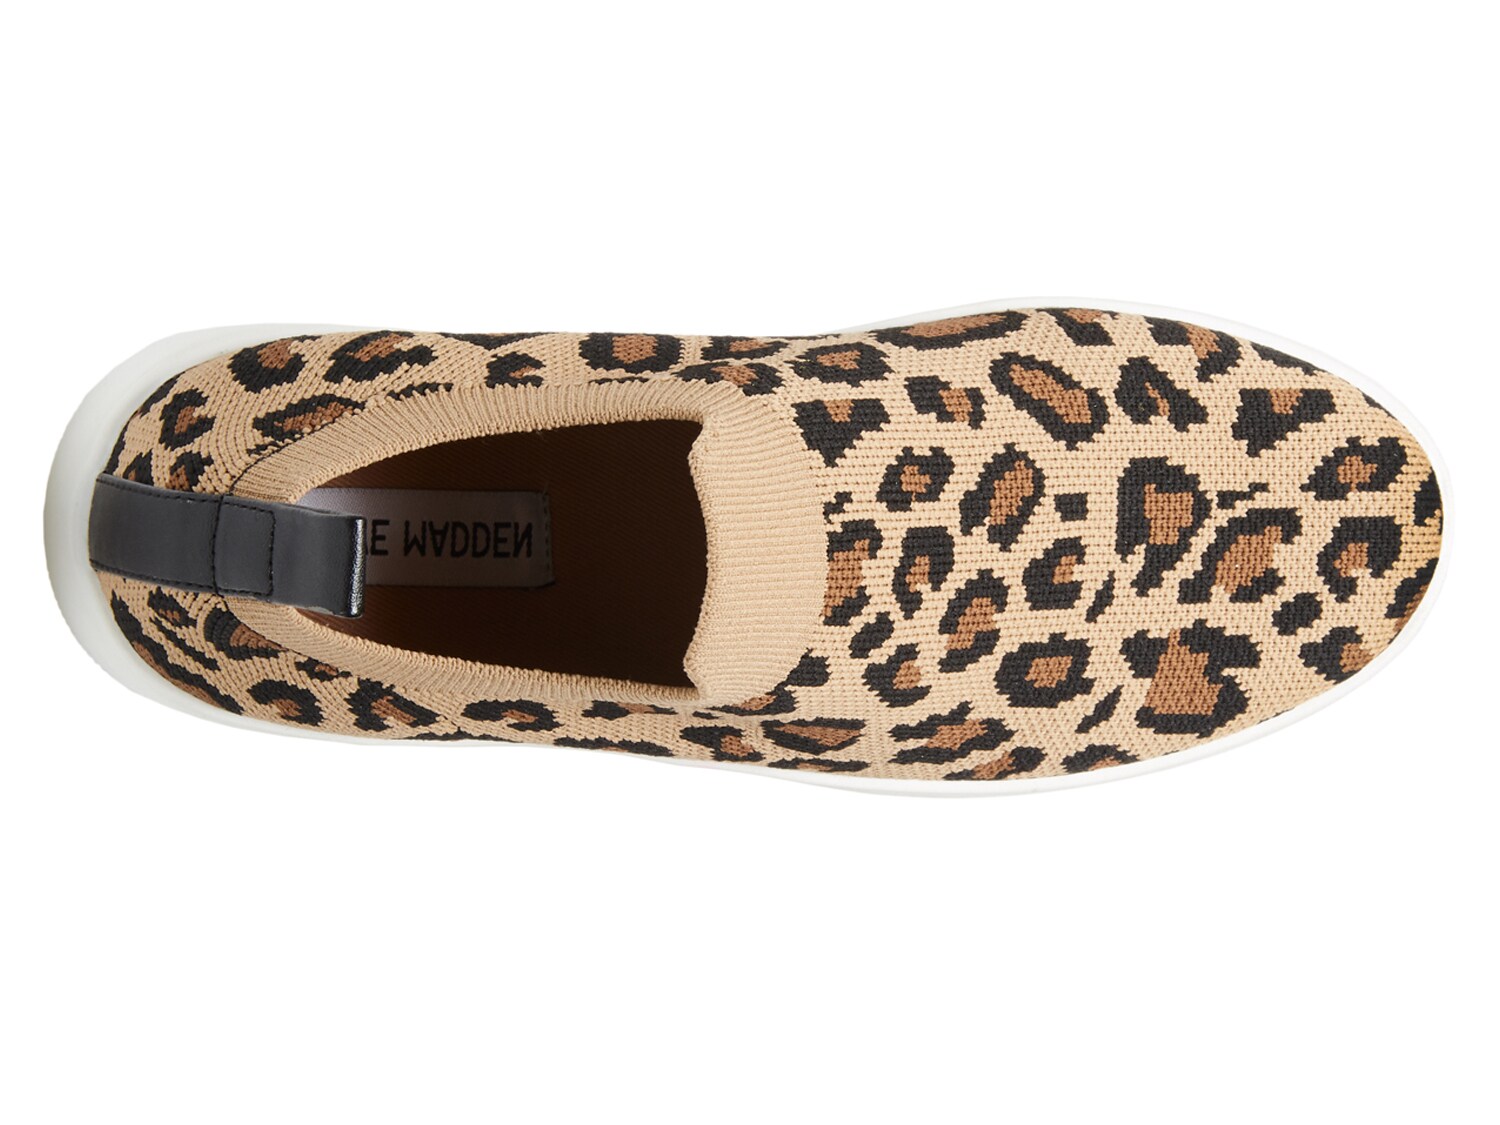 steve madden beale leopard print stretch knit sneakers